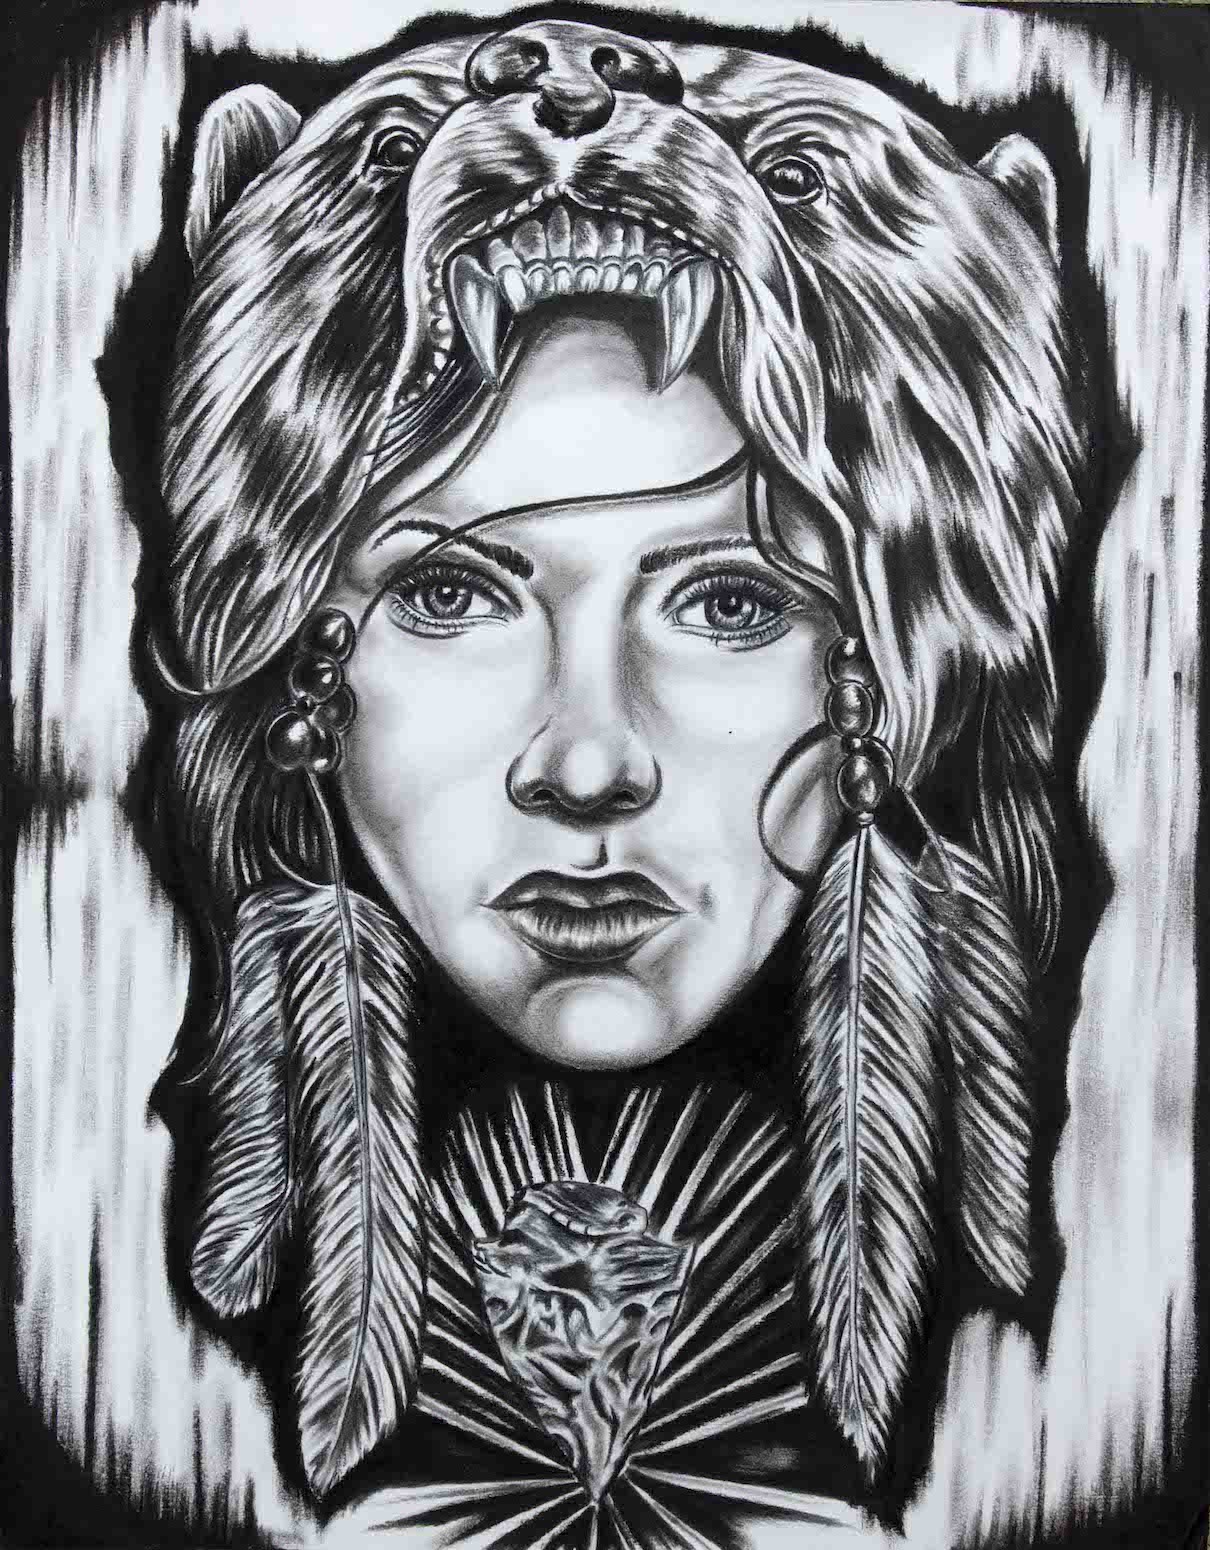 "Native beauty" prison art original art Joshua Willis 